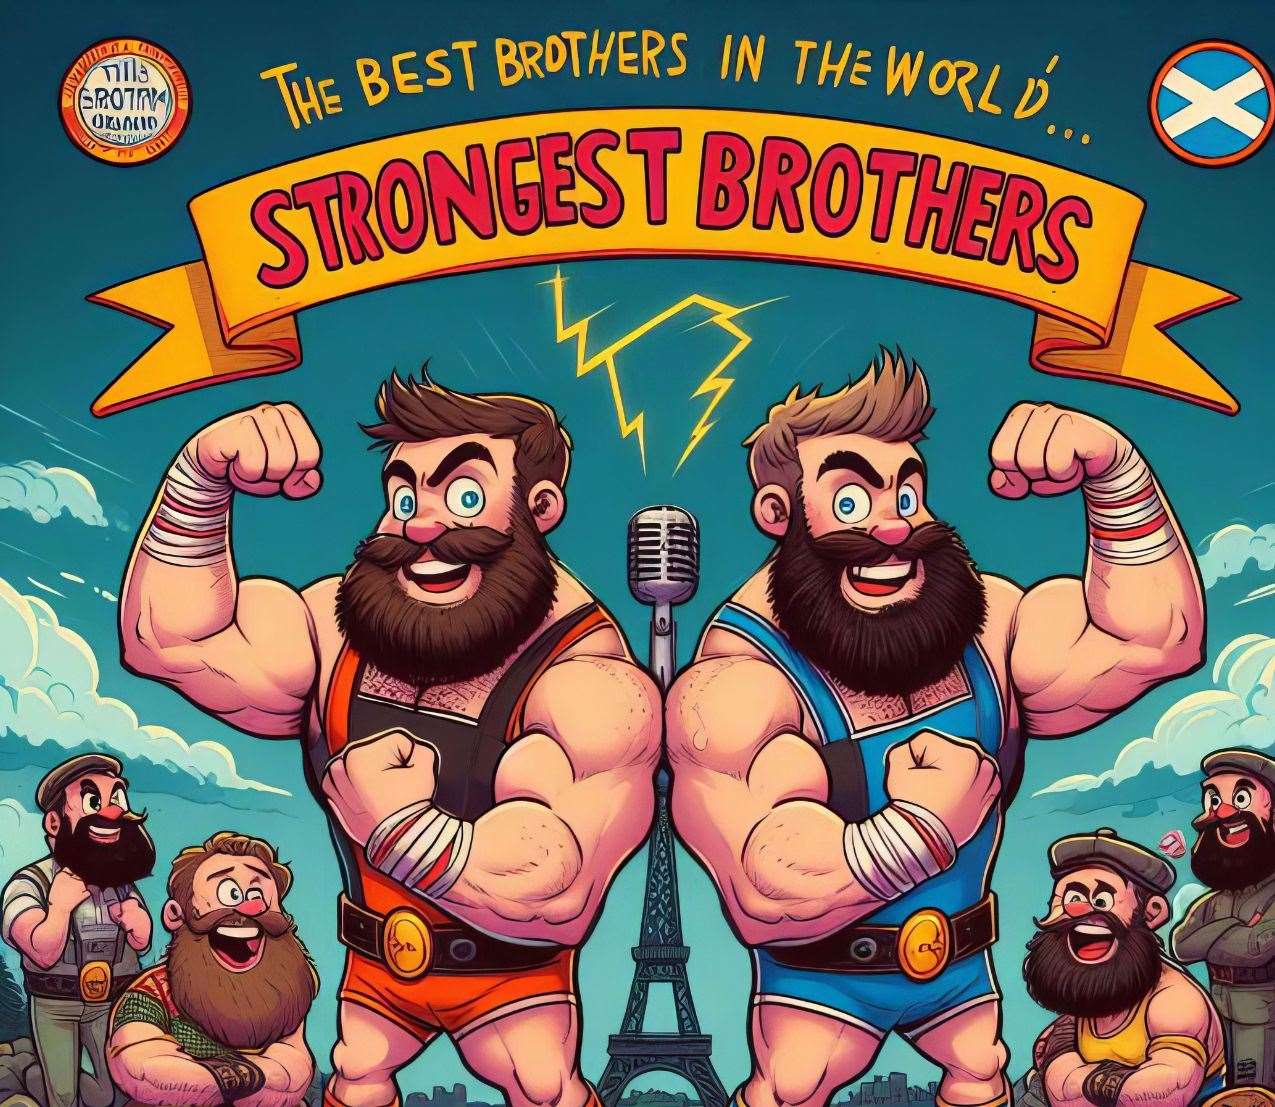 The World's Strongest Brothers, by Paul Sheriff aka Sheriffdude.